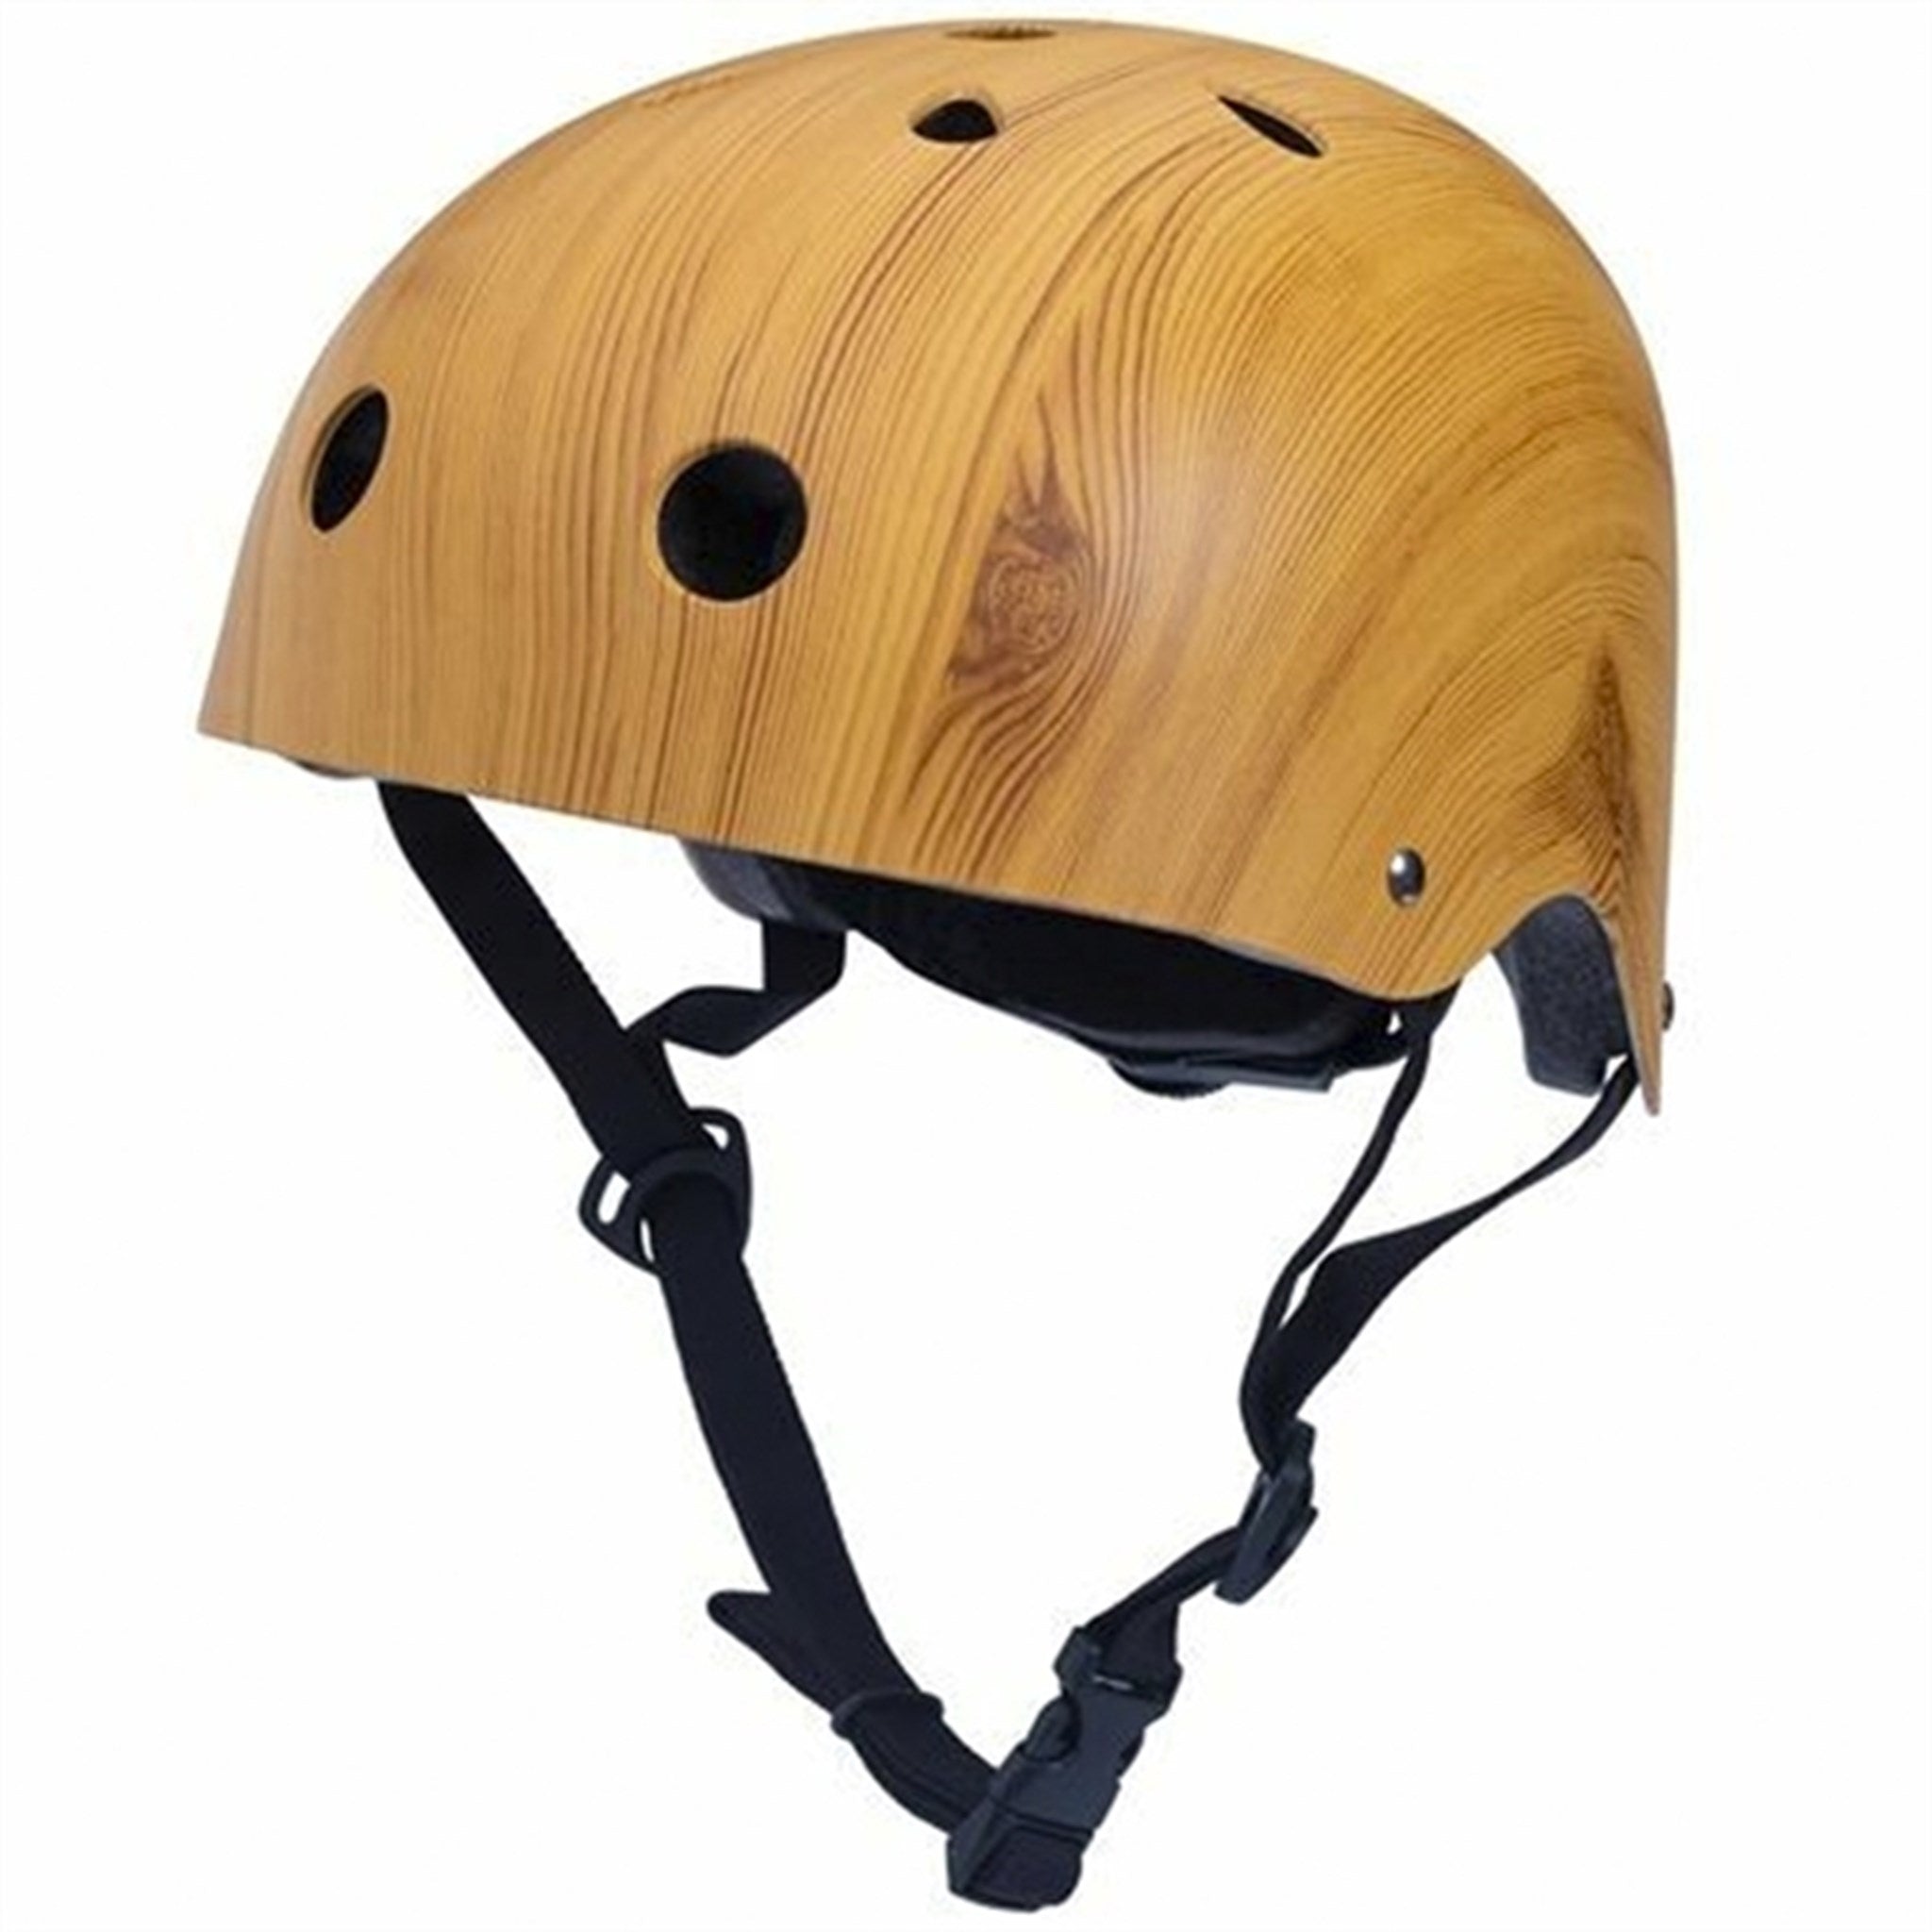 Trybike CoConut Wood Helmet Retro Look